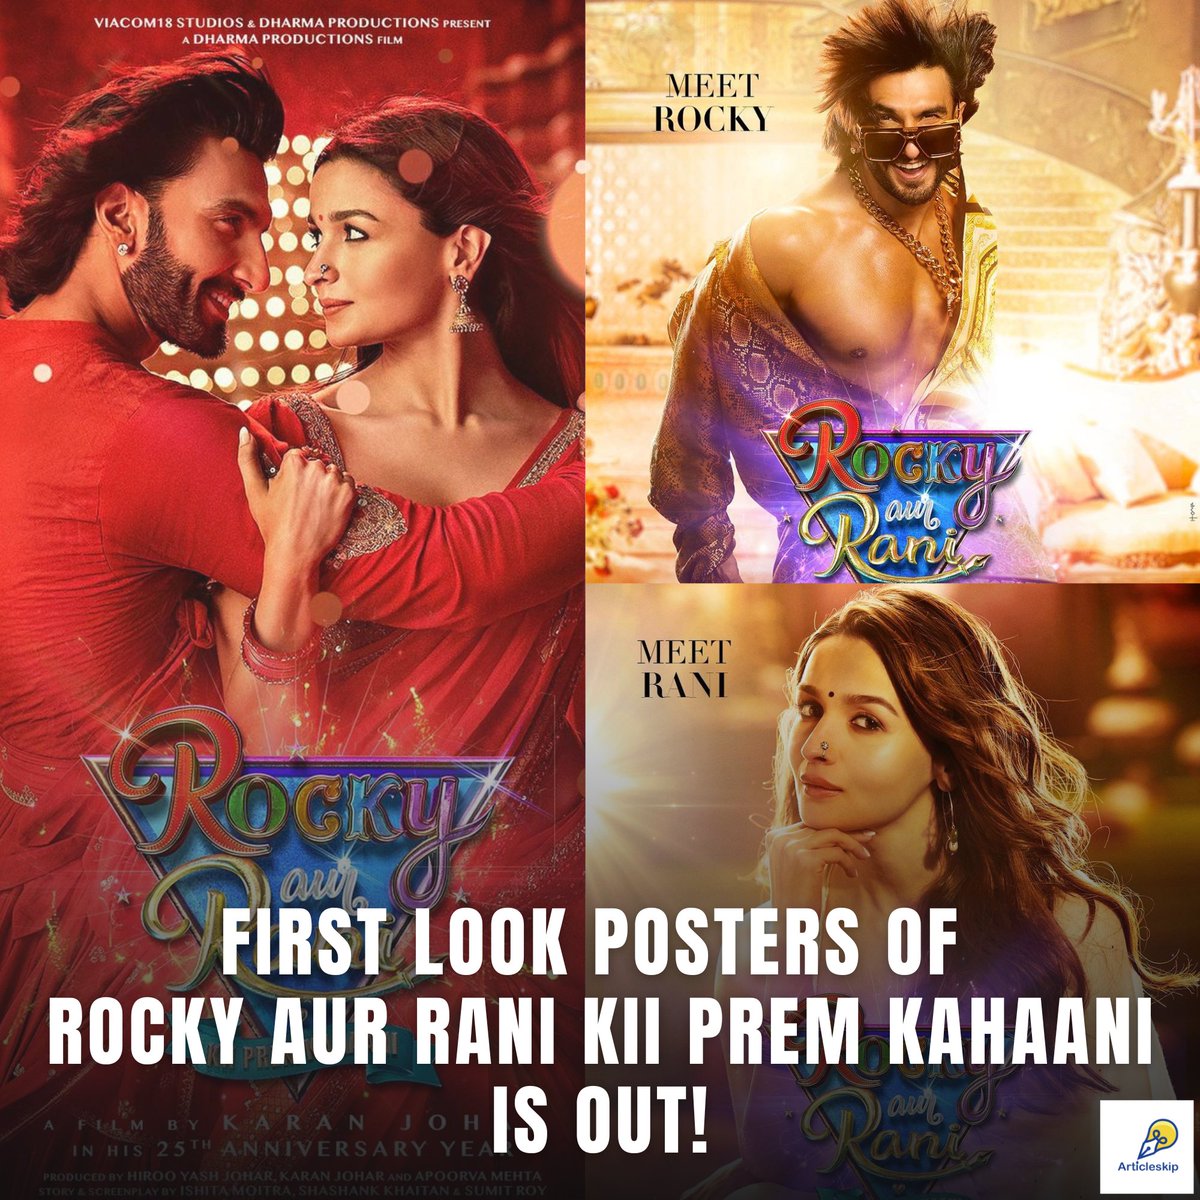 On his own birthday, @karanjohar shared 10 first-look posters of @ranveersingh and @aliaabhatt starrer Rocky Aur Rani Kii Prem Kahaani.
.
articleskip.com/kjo-shared-the…
.
#AliaBhatt #RanveerSingh #RockyAurRaniKiiPremKahaani #KaranJohar #articleskip